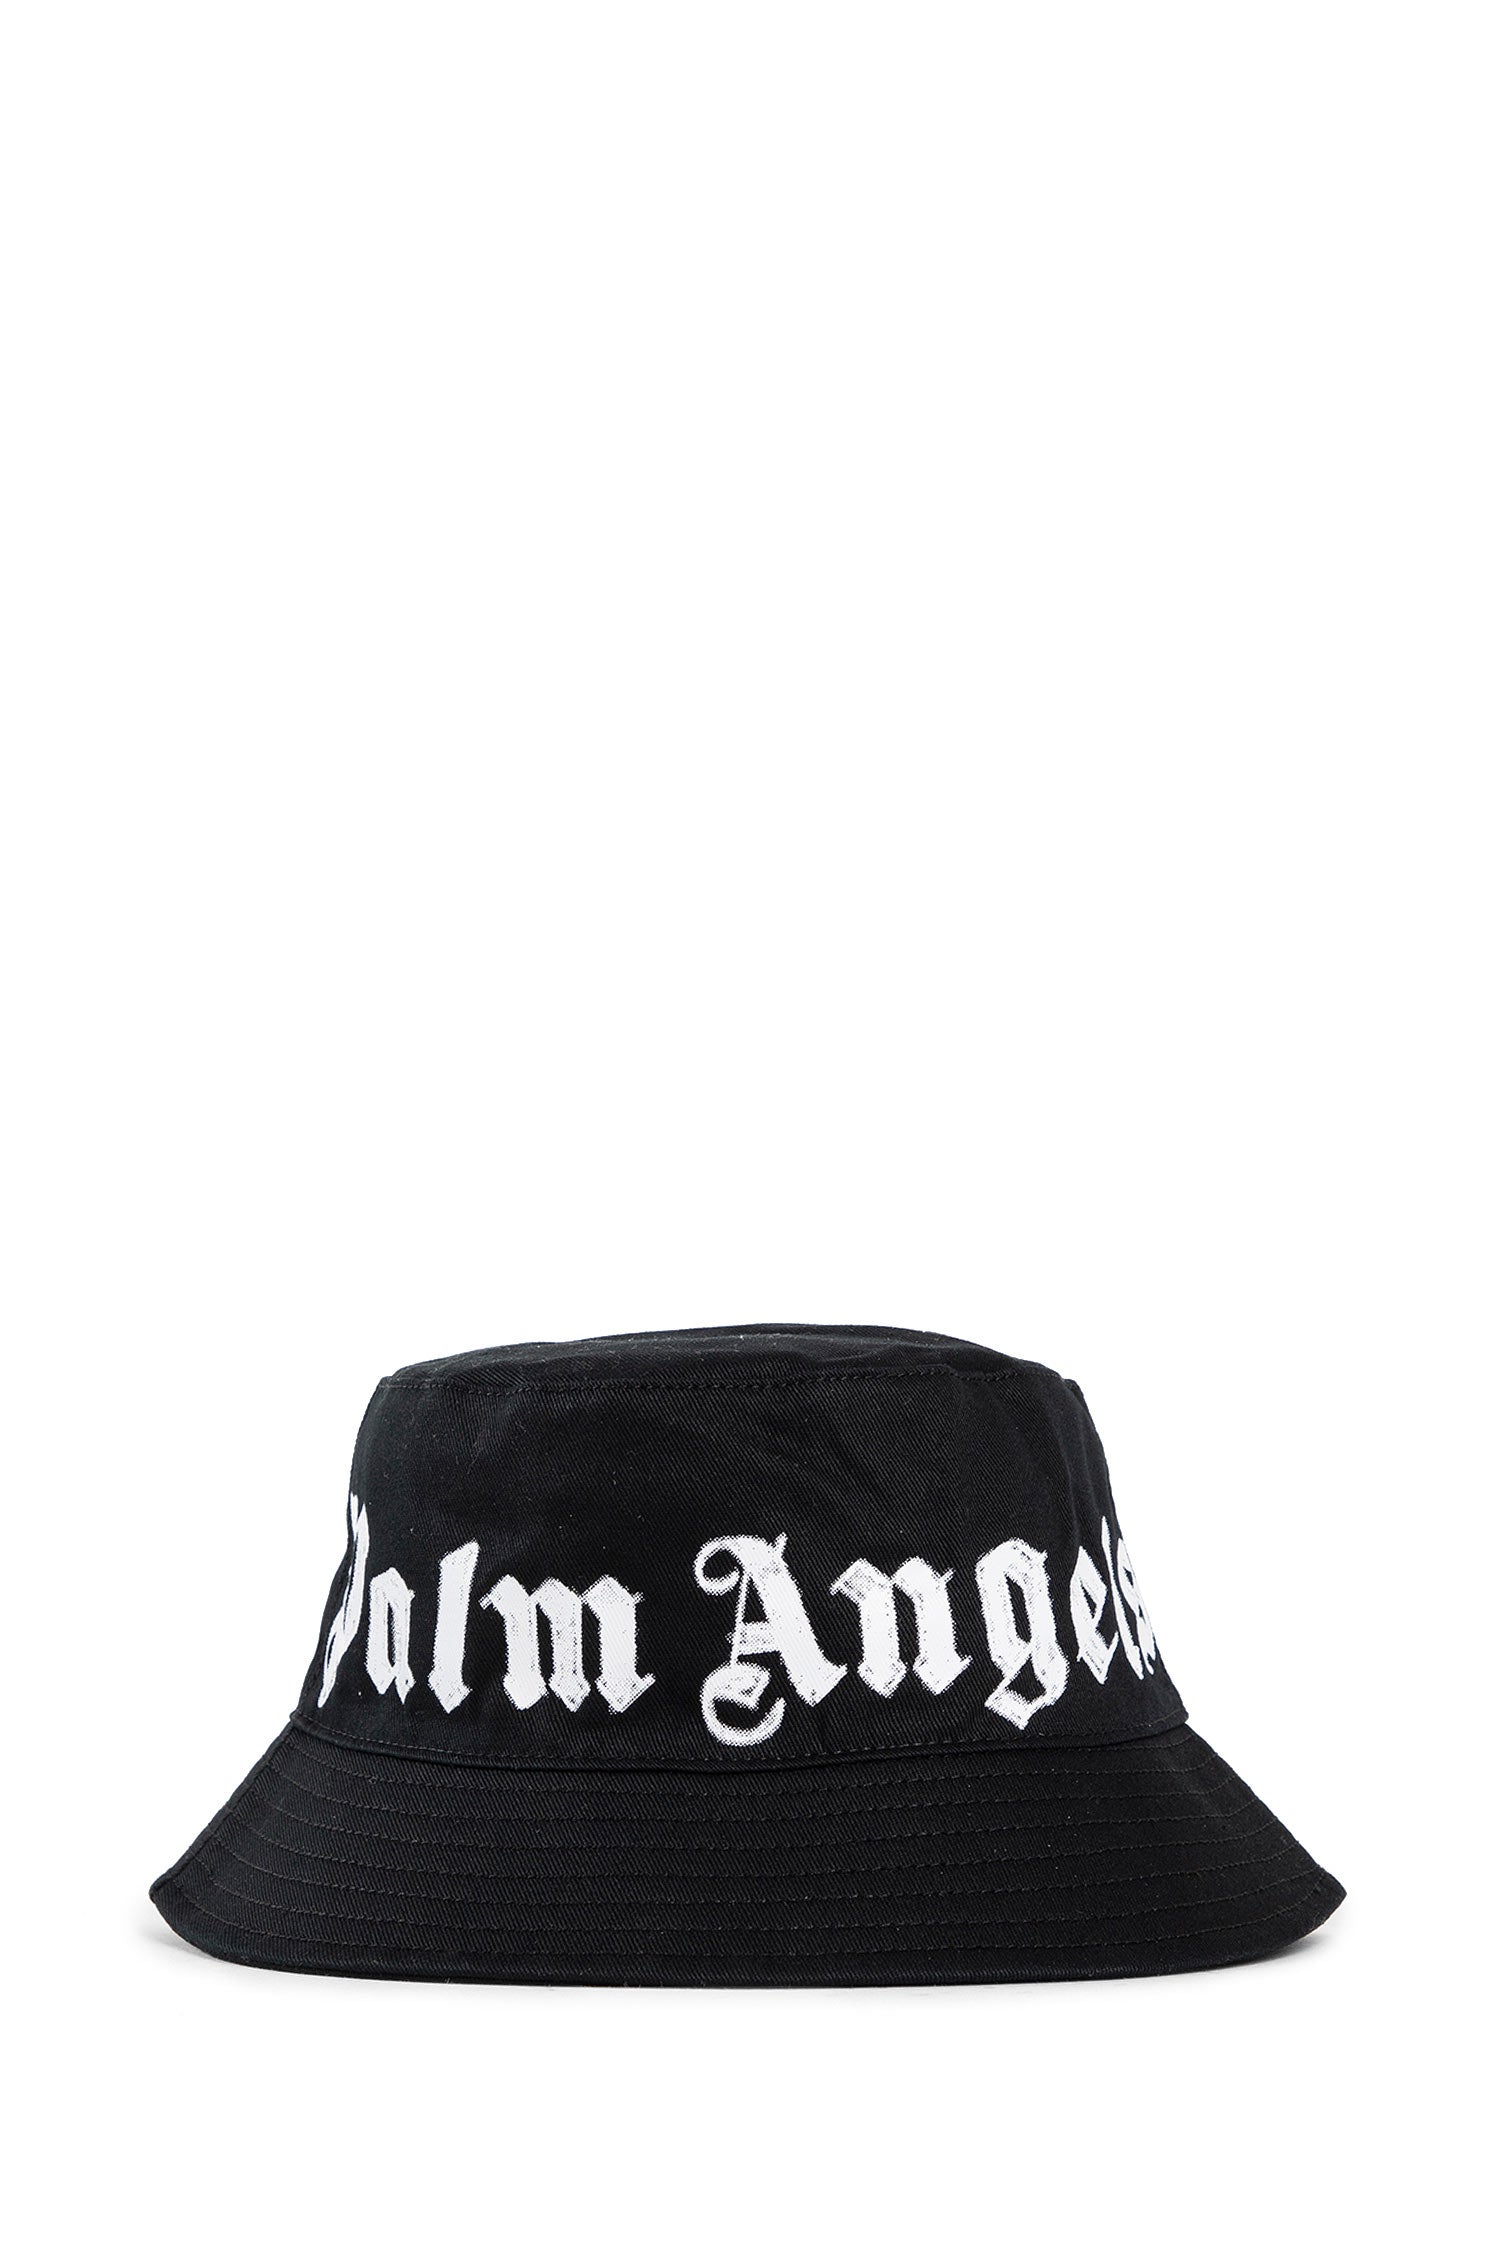 PALM ANGELS MAN BLACK HATS